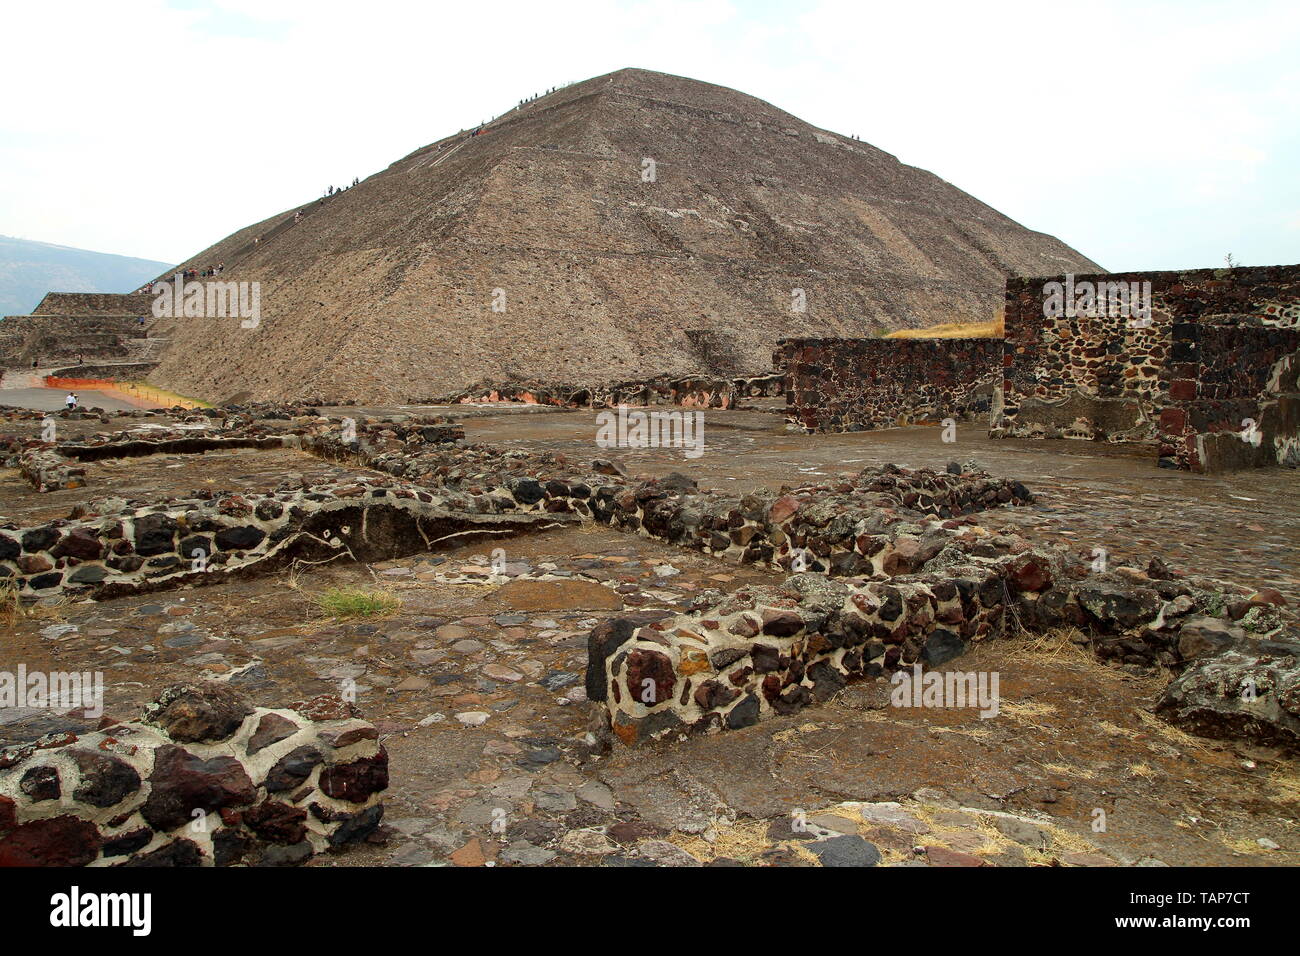 Pyramids of Teotihuacan, Pre-Hispanic city, UNESCO World Heritage Site, Mexico. Stock Photo